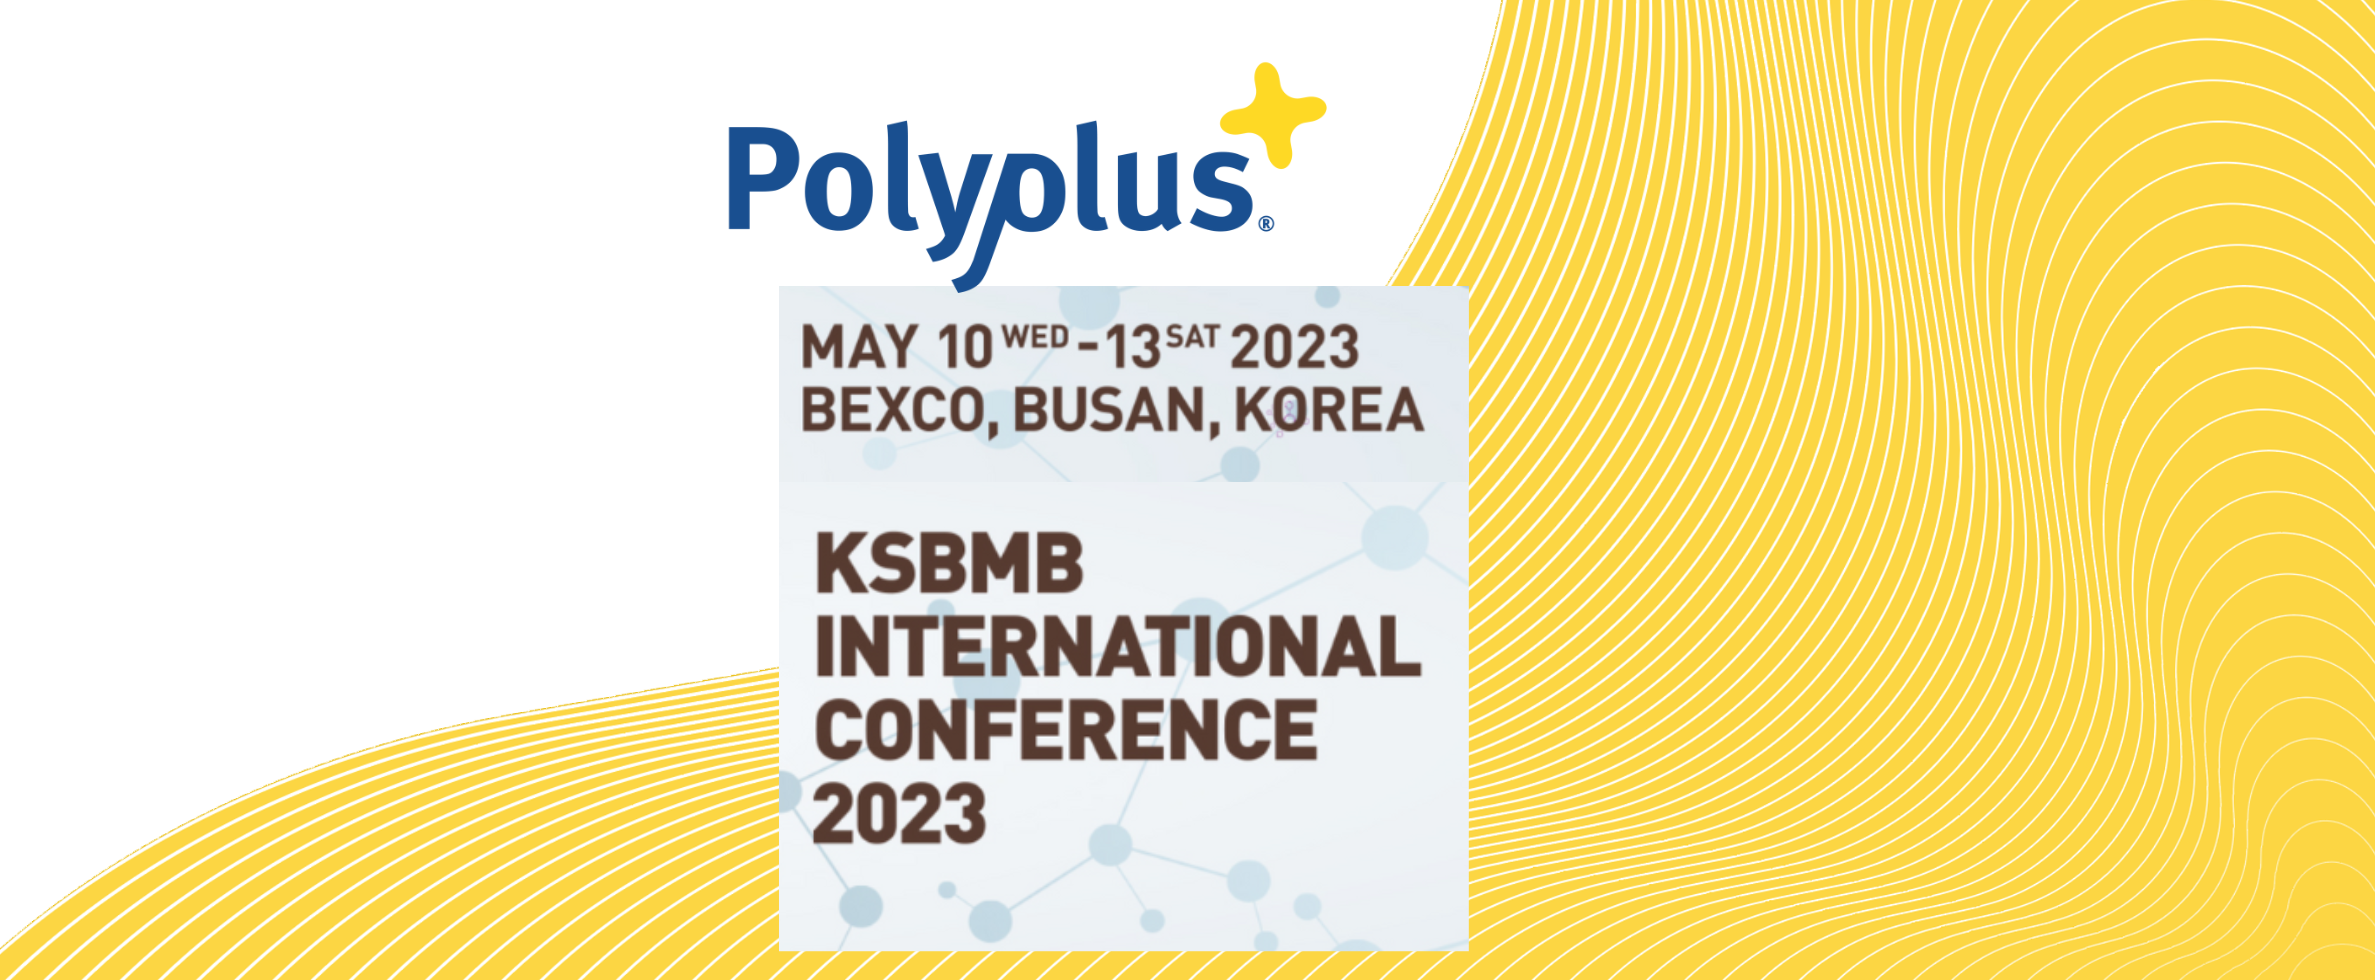 KSBMB International Conference 2023